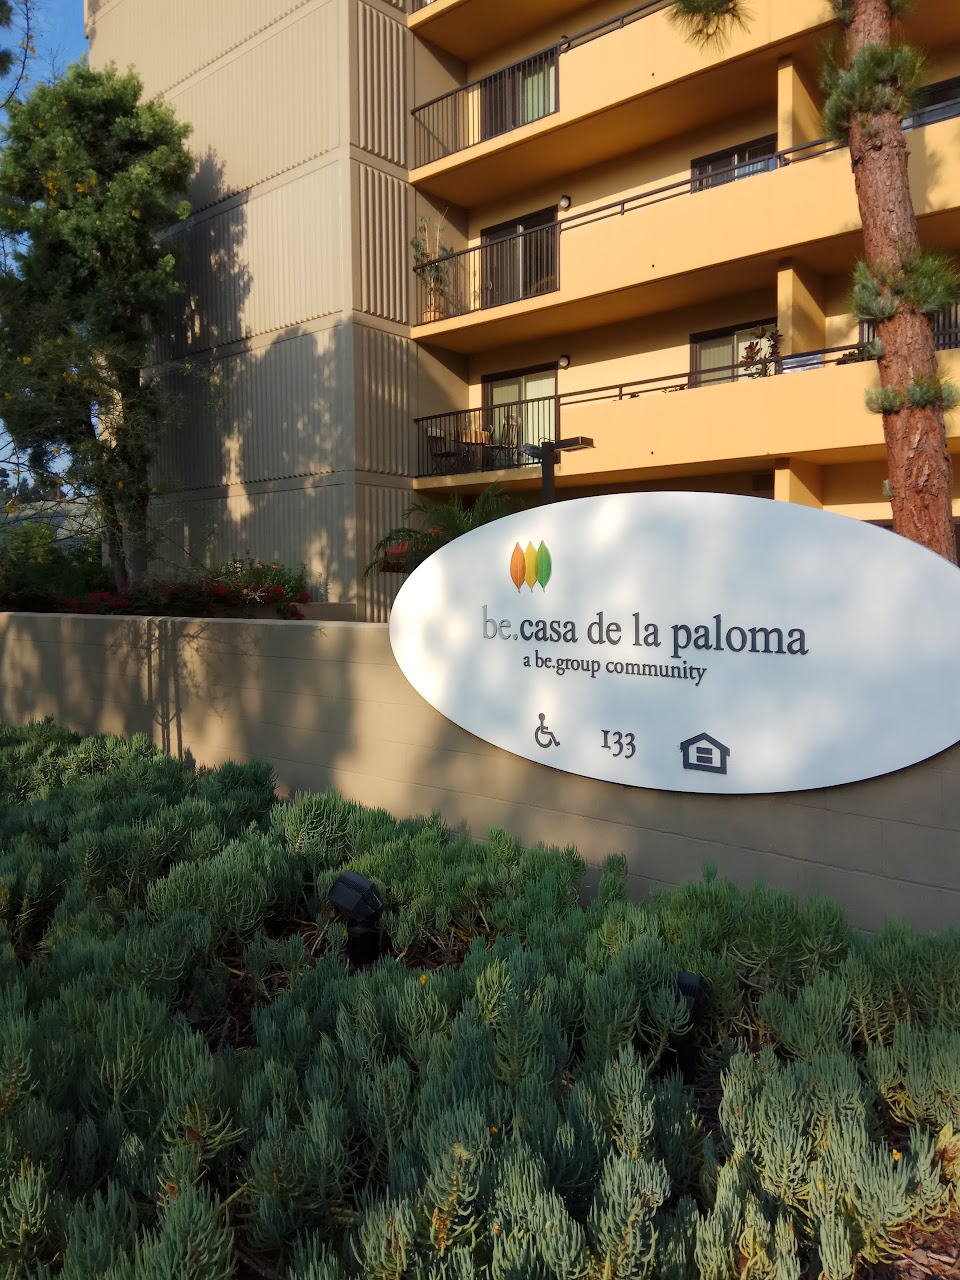 Photo of CASA DE LA PALOMA - GLENDALE. Affordable housing located at 133 S KENWOOD ST GLENDALE, CA 91205